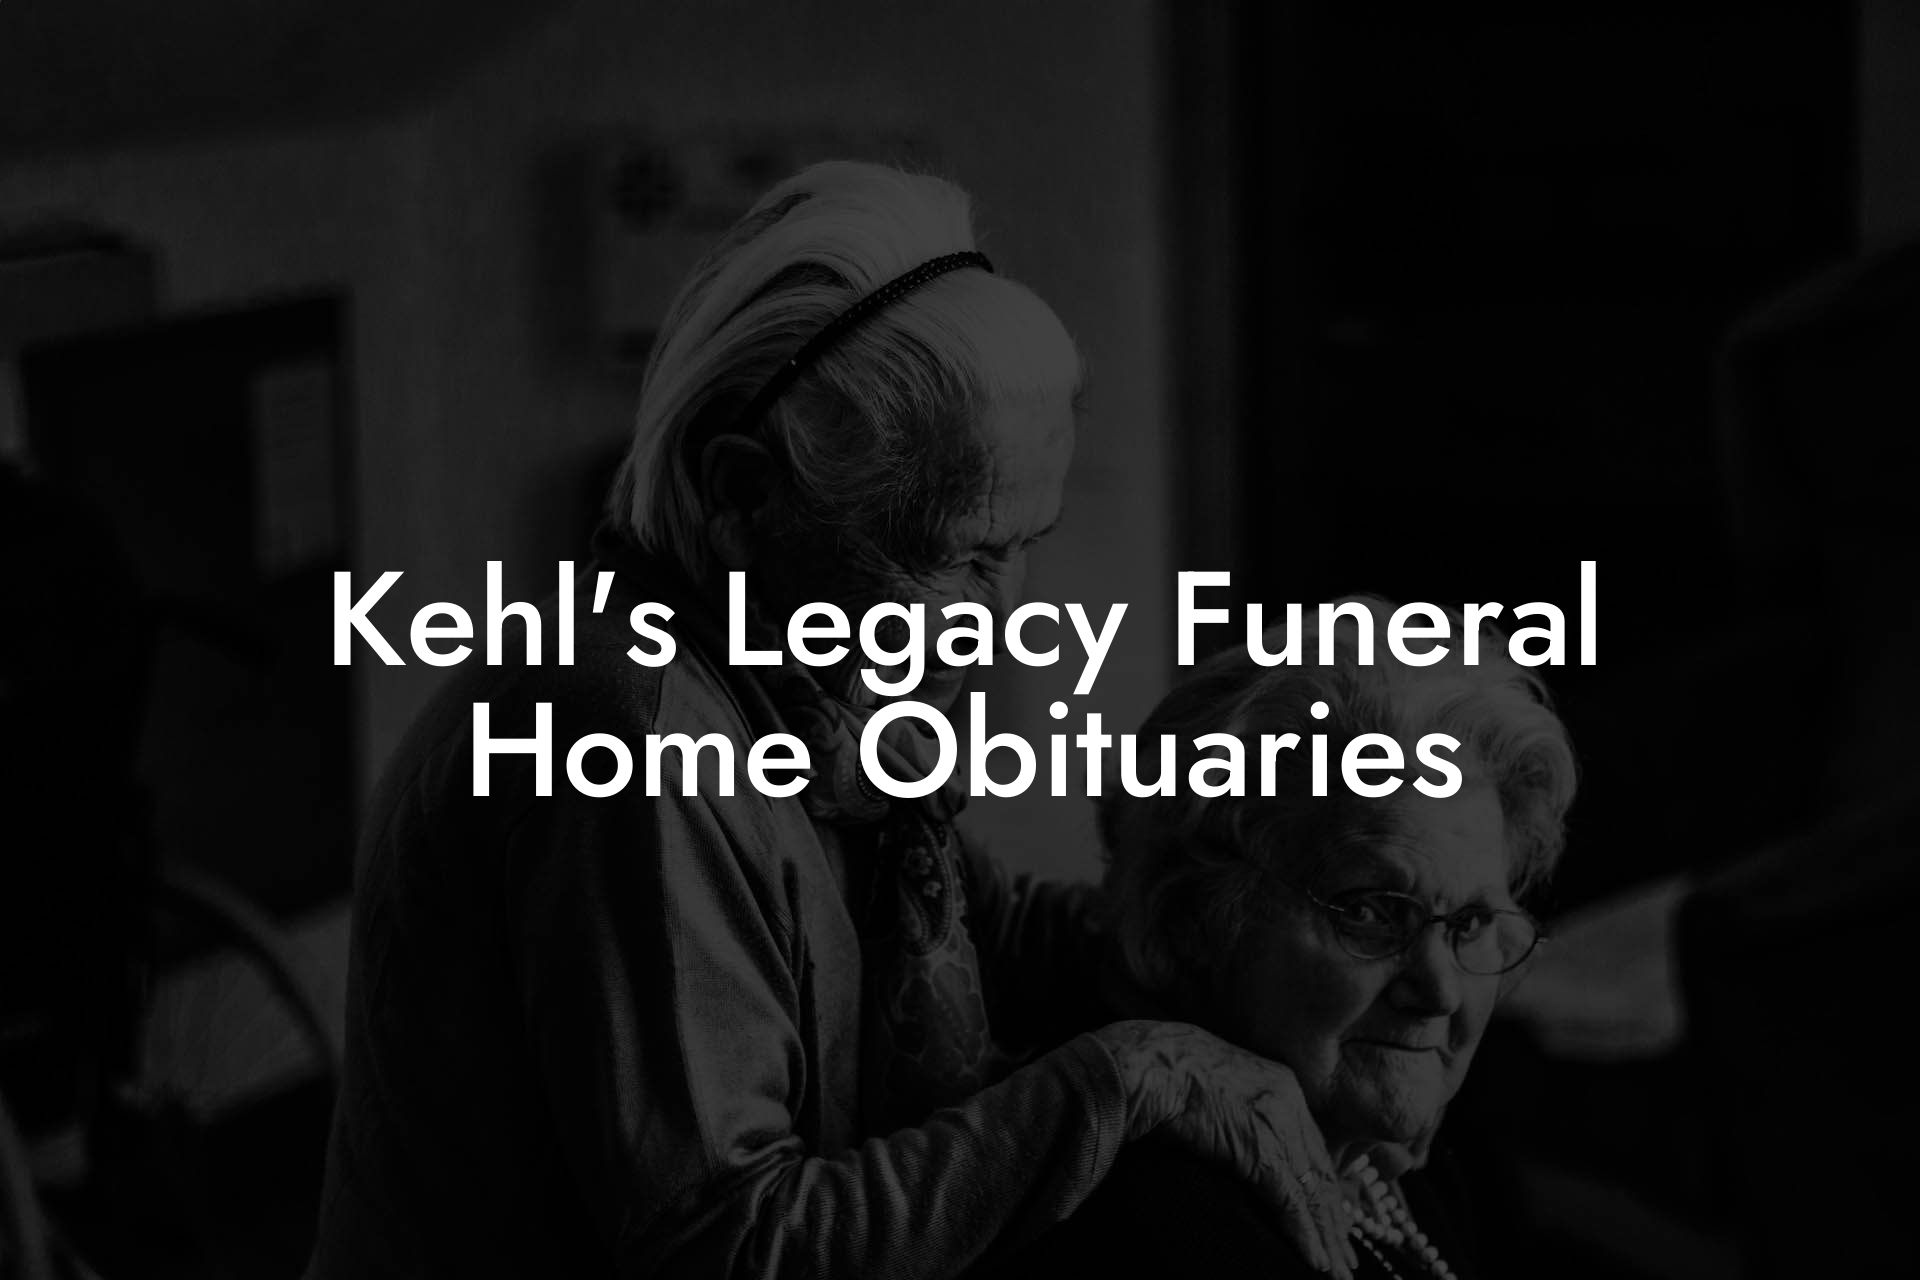 Kehl's Legacy Funeral Home Obituaries